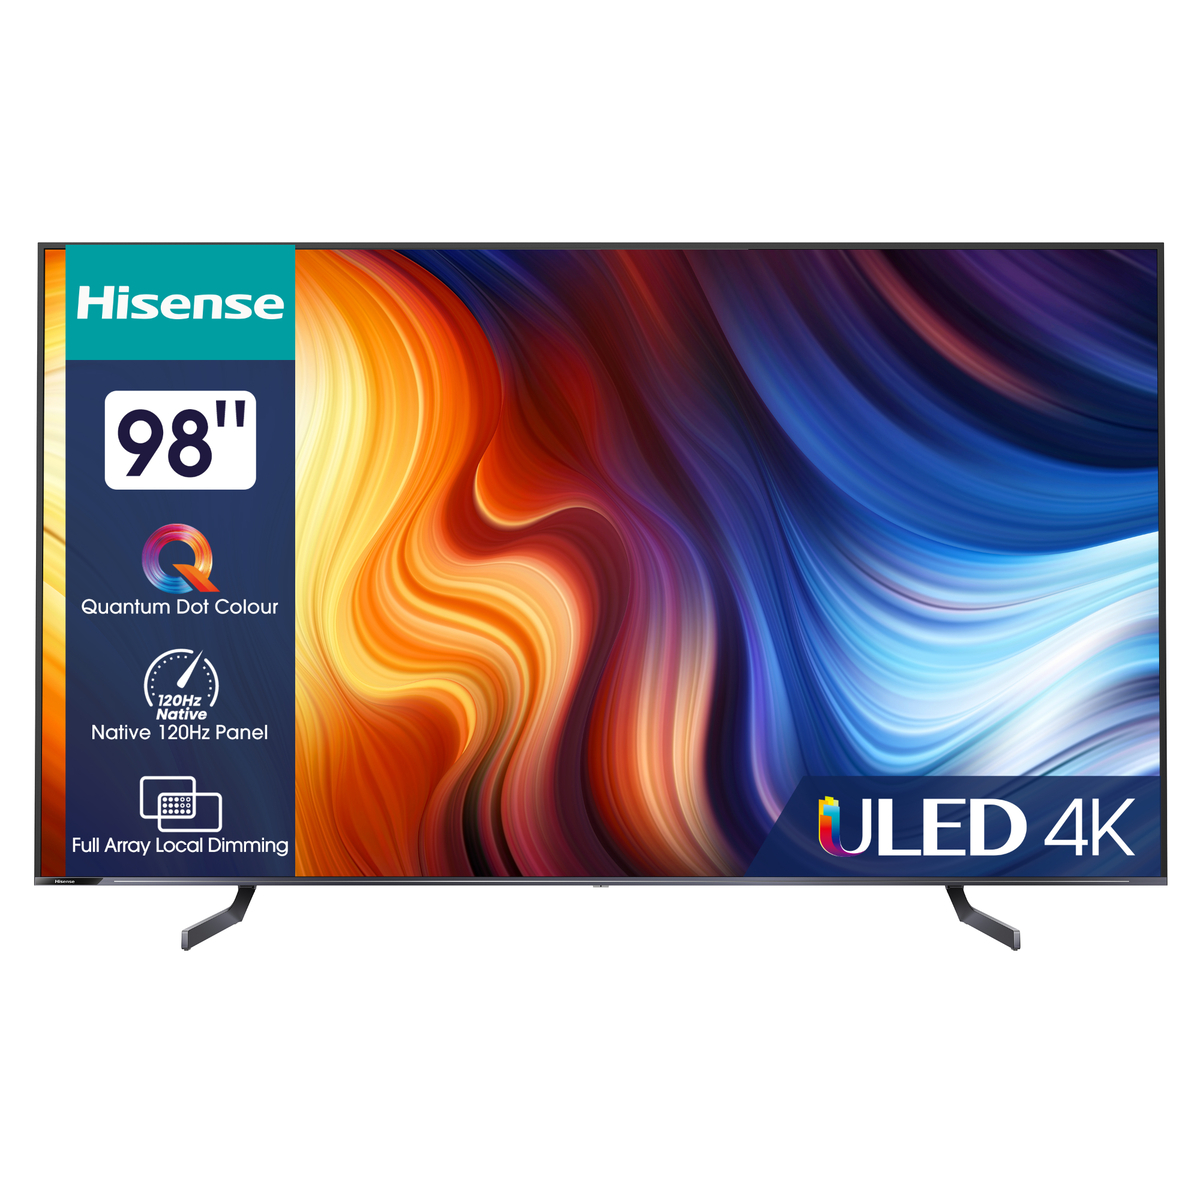 Hisense 4K Ultra HD ULED Smart TV  98U7HQ 98"